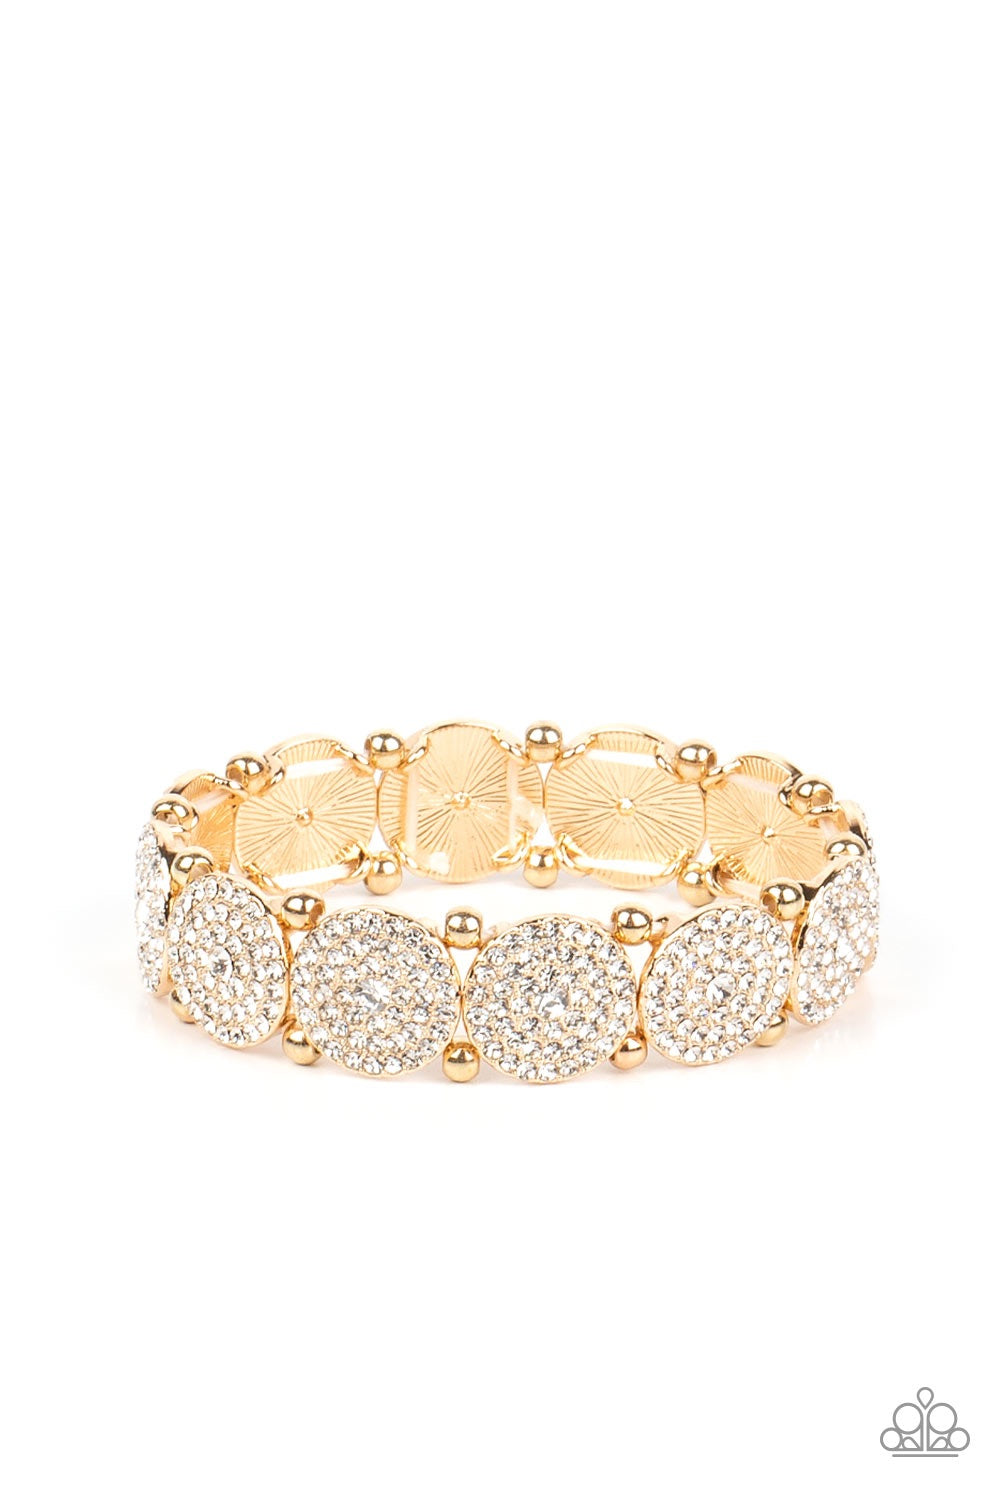 Paparazzi Palace Intrigue - Gold Bracelet - A Finishing Touch Jewelry